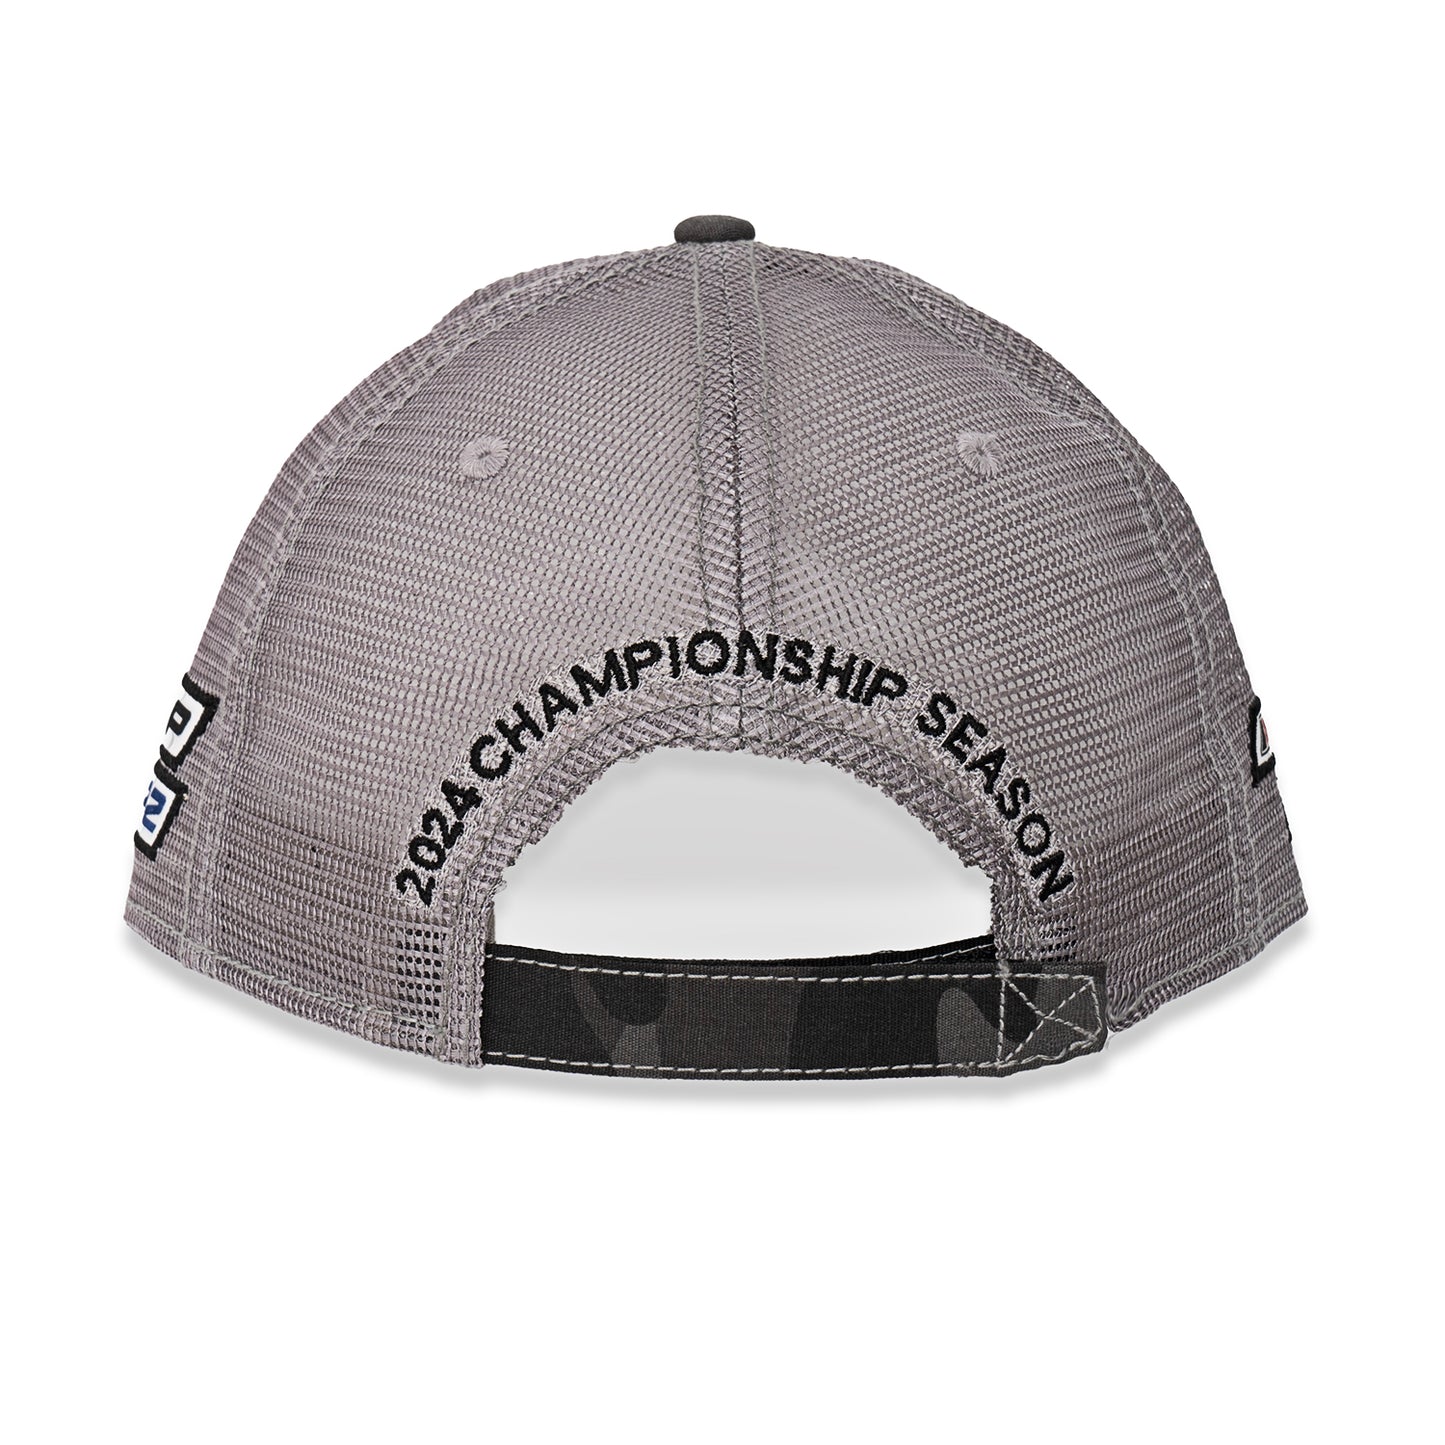 2024 IMSA WeatherTech SportsCar Championship Hat - Grey Camo